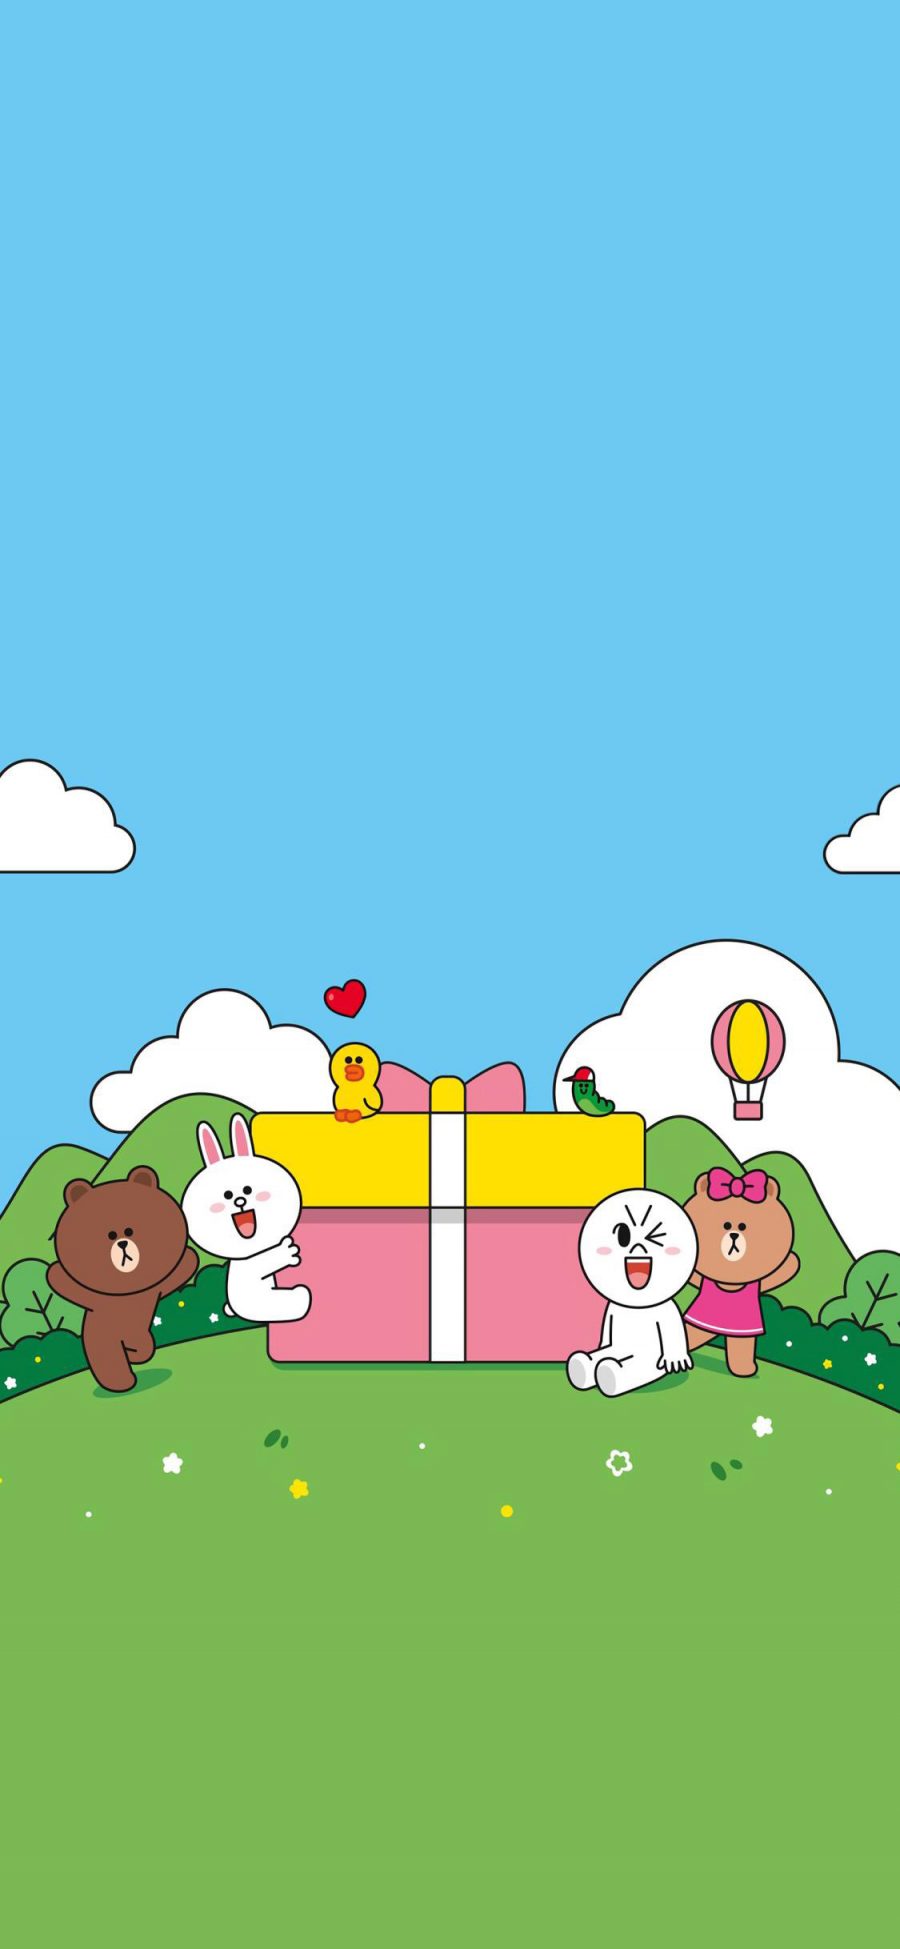 [2436×1125]linefriends 布朗熊 可妮兔 卡通 礼物盒 苹果手机动漫壁纸图片